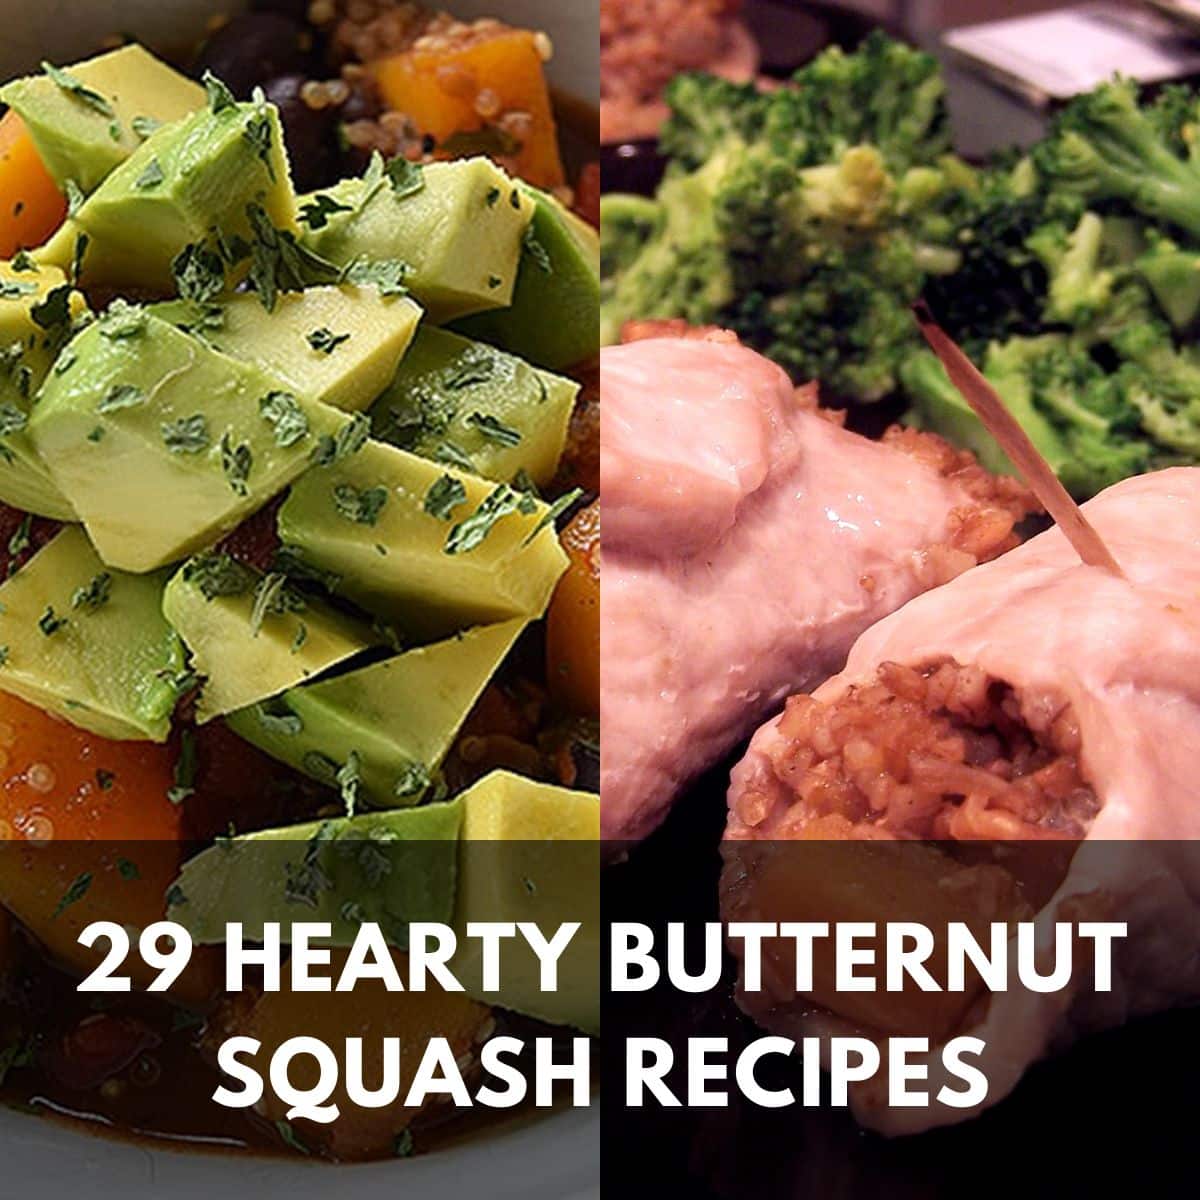 29 hearty butternut squash recipes main